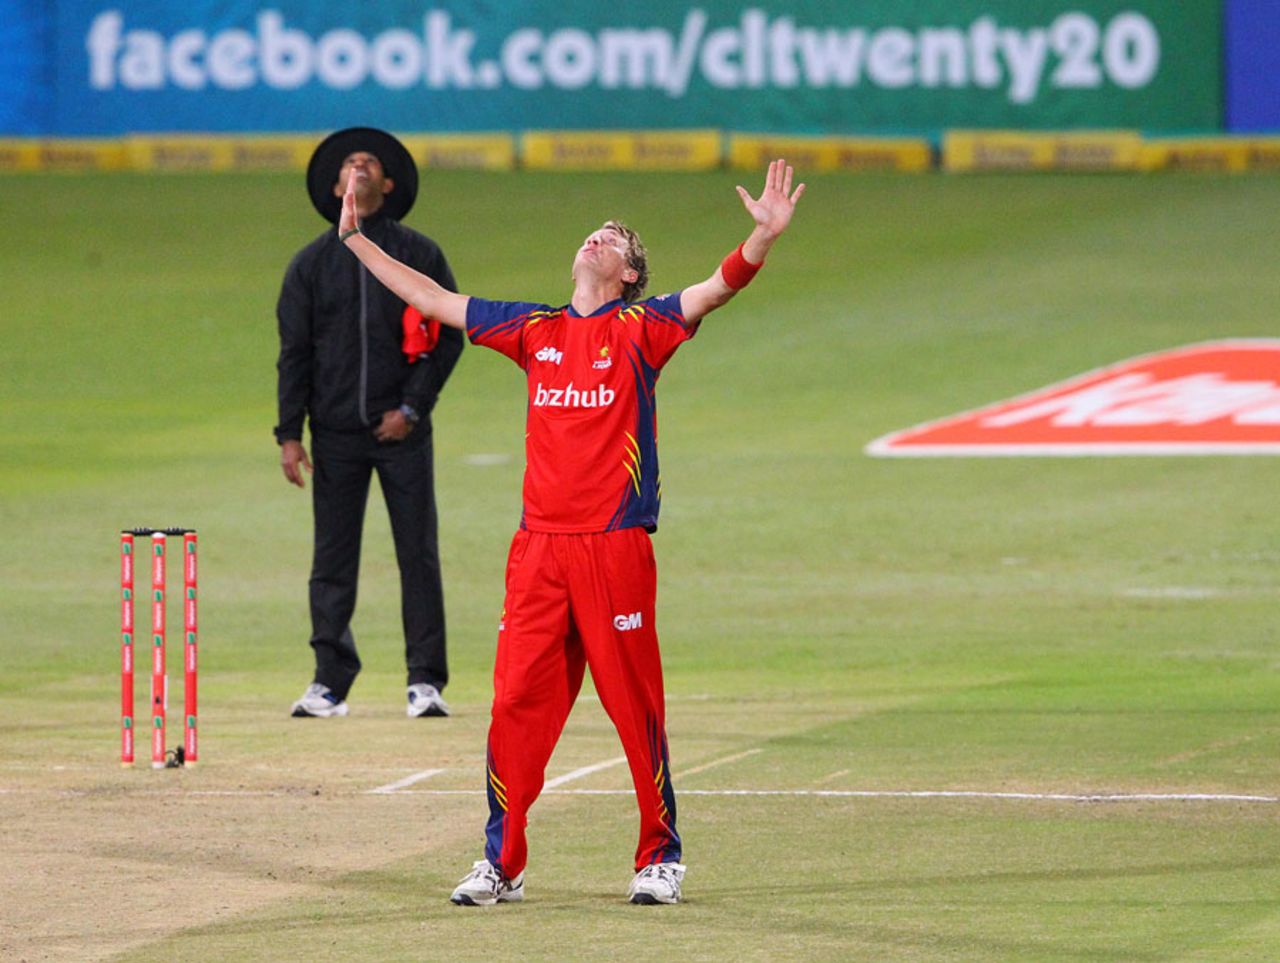 Chris Morris sets himself to take David Warner's return-catch, Delhi Daredevils v Lions, 1st semi-final, Champions League T20, Durban, October 25, 2012